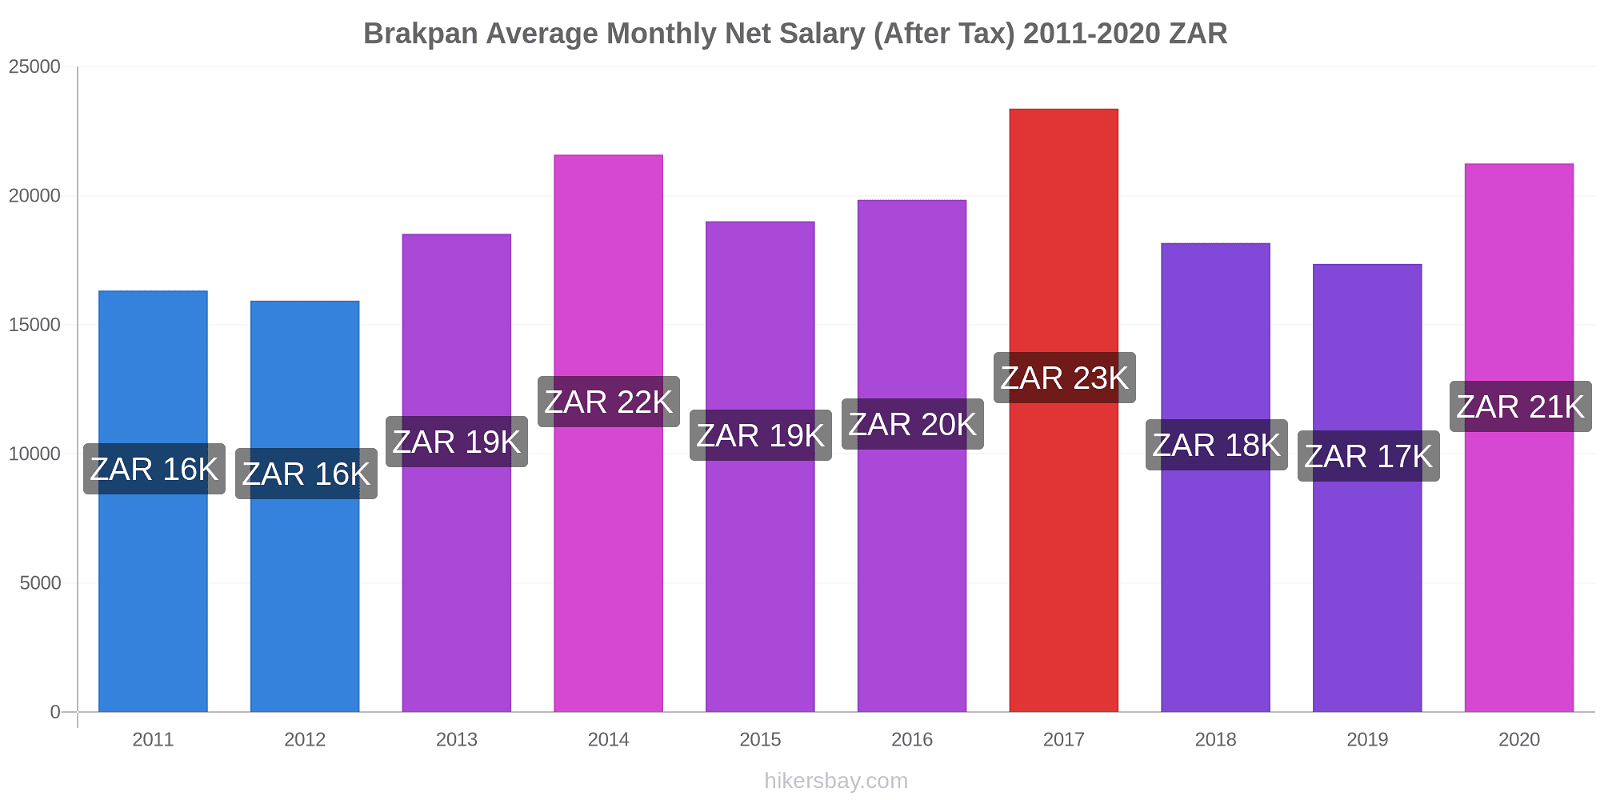 Brakpan price changes Average Monthly Net Salary (After Tax) hikersbay.com